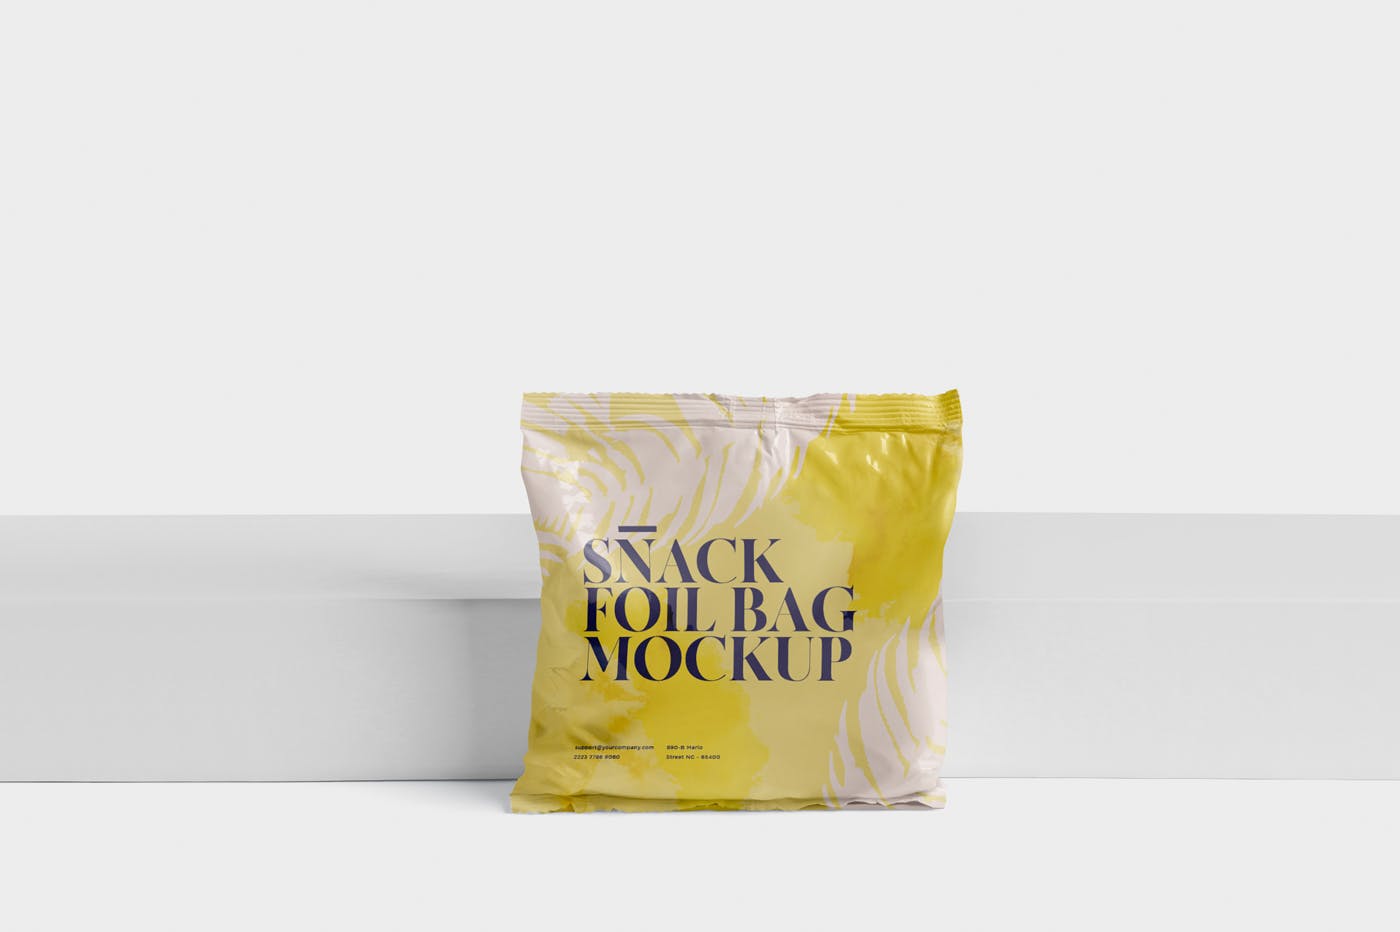 小吃零食铝箔包装袋设计图素材中国精选 Snack Foil Bag Mockup – Square Size – Small插图(3)